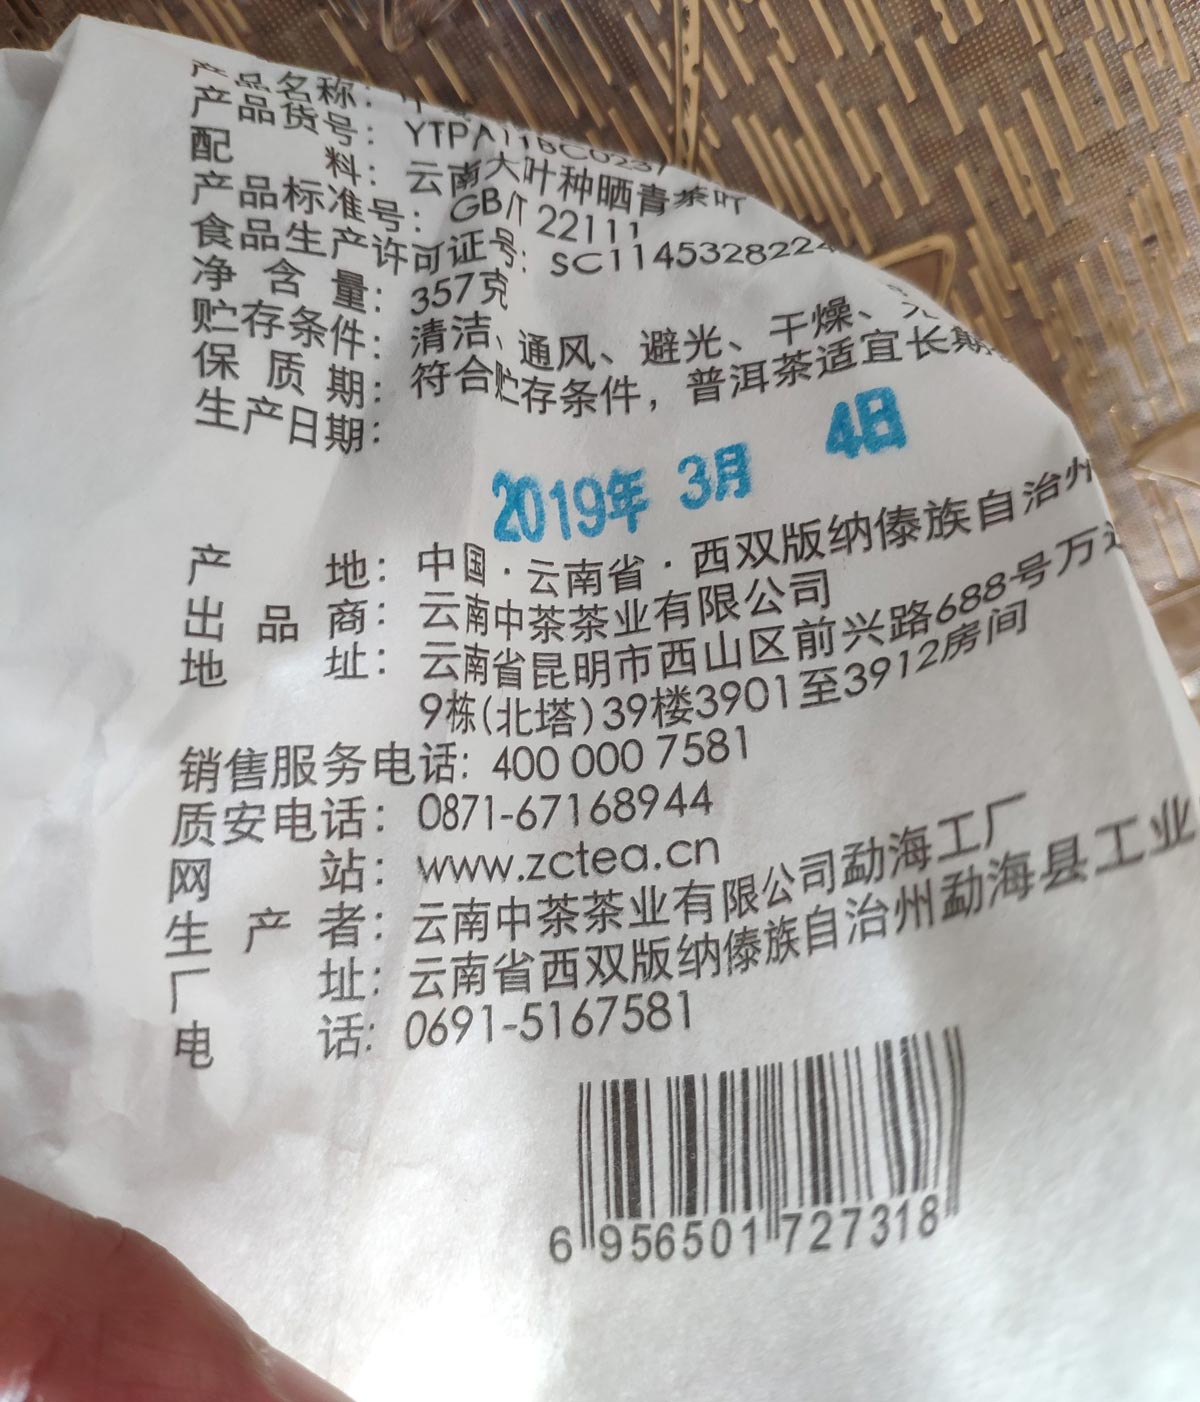 Чжун Ча 7741, шэн пуэр, информация на упаковке, дата выпуска